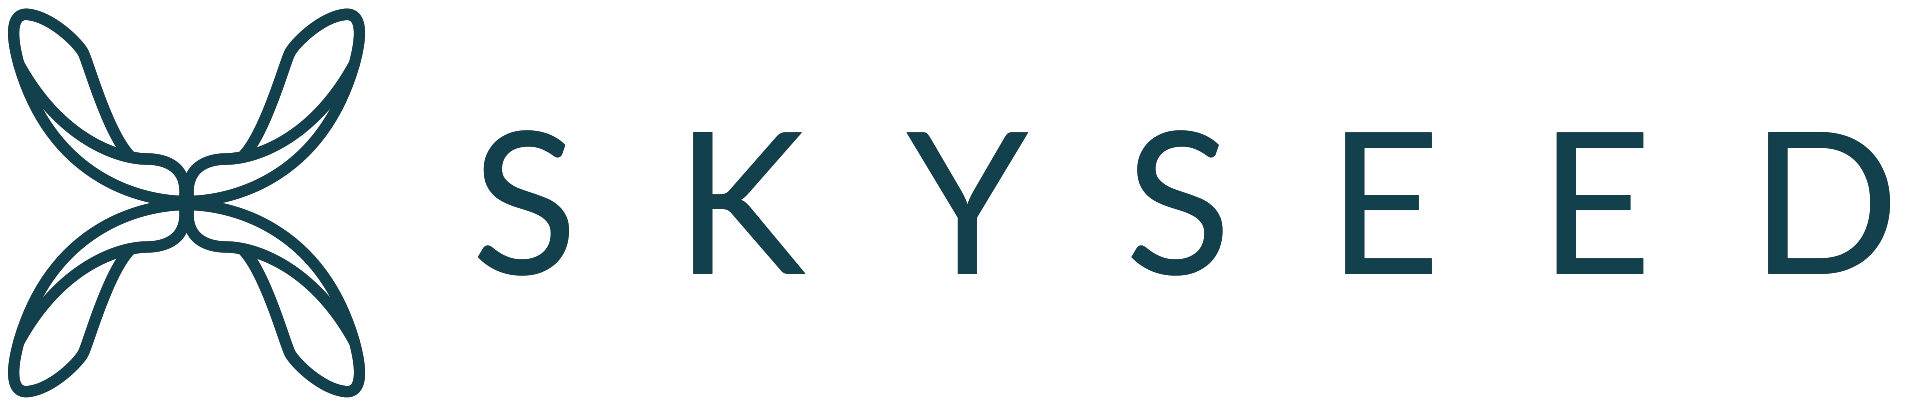 skyseed-logo